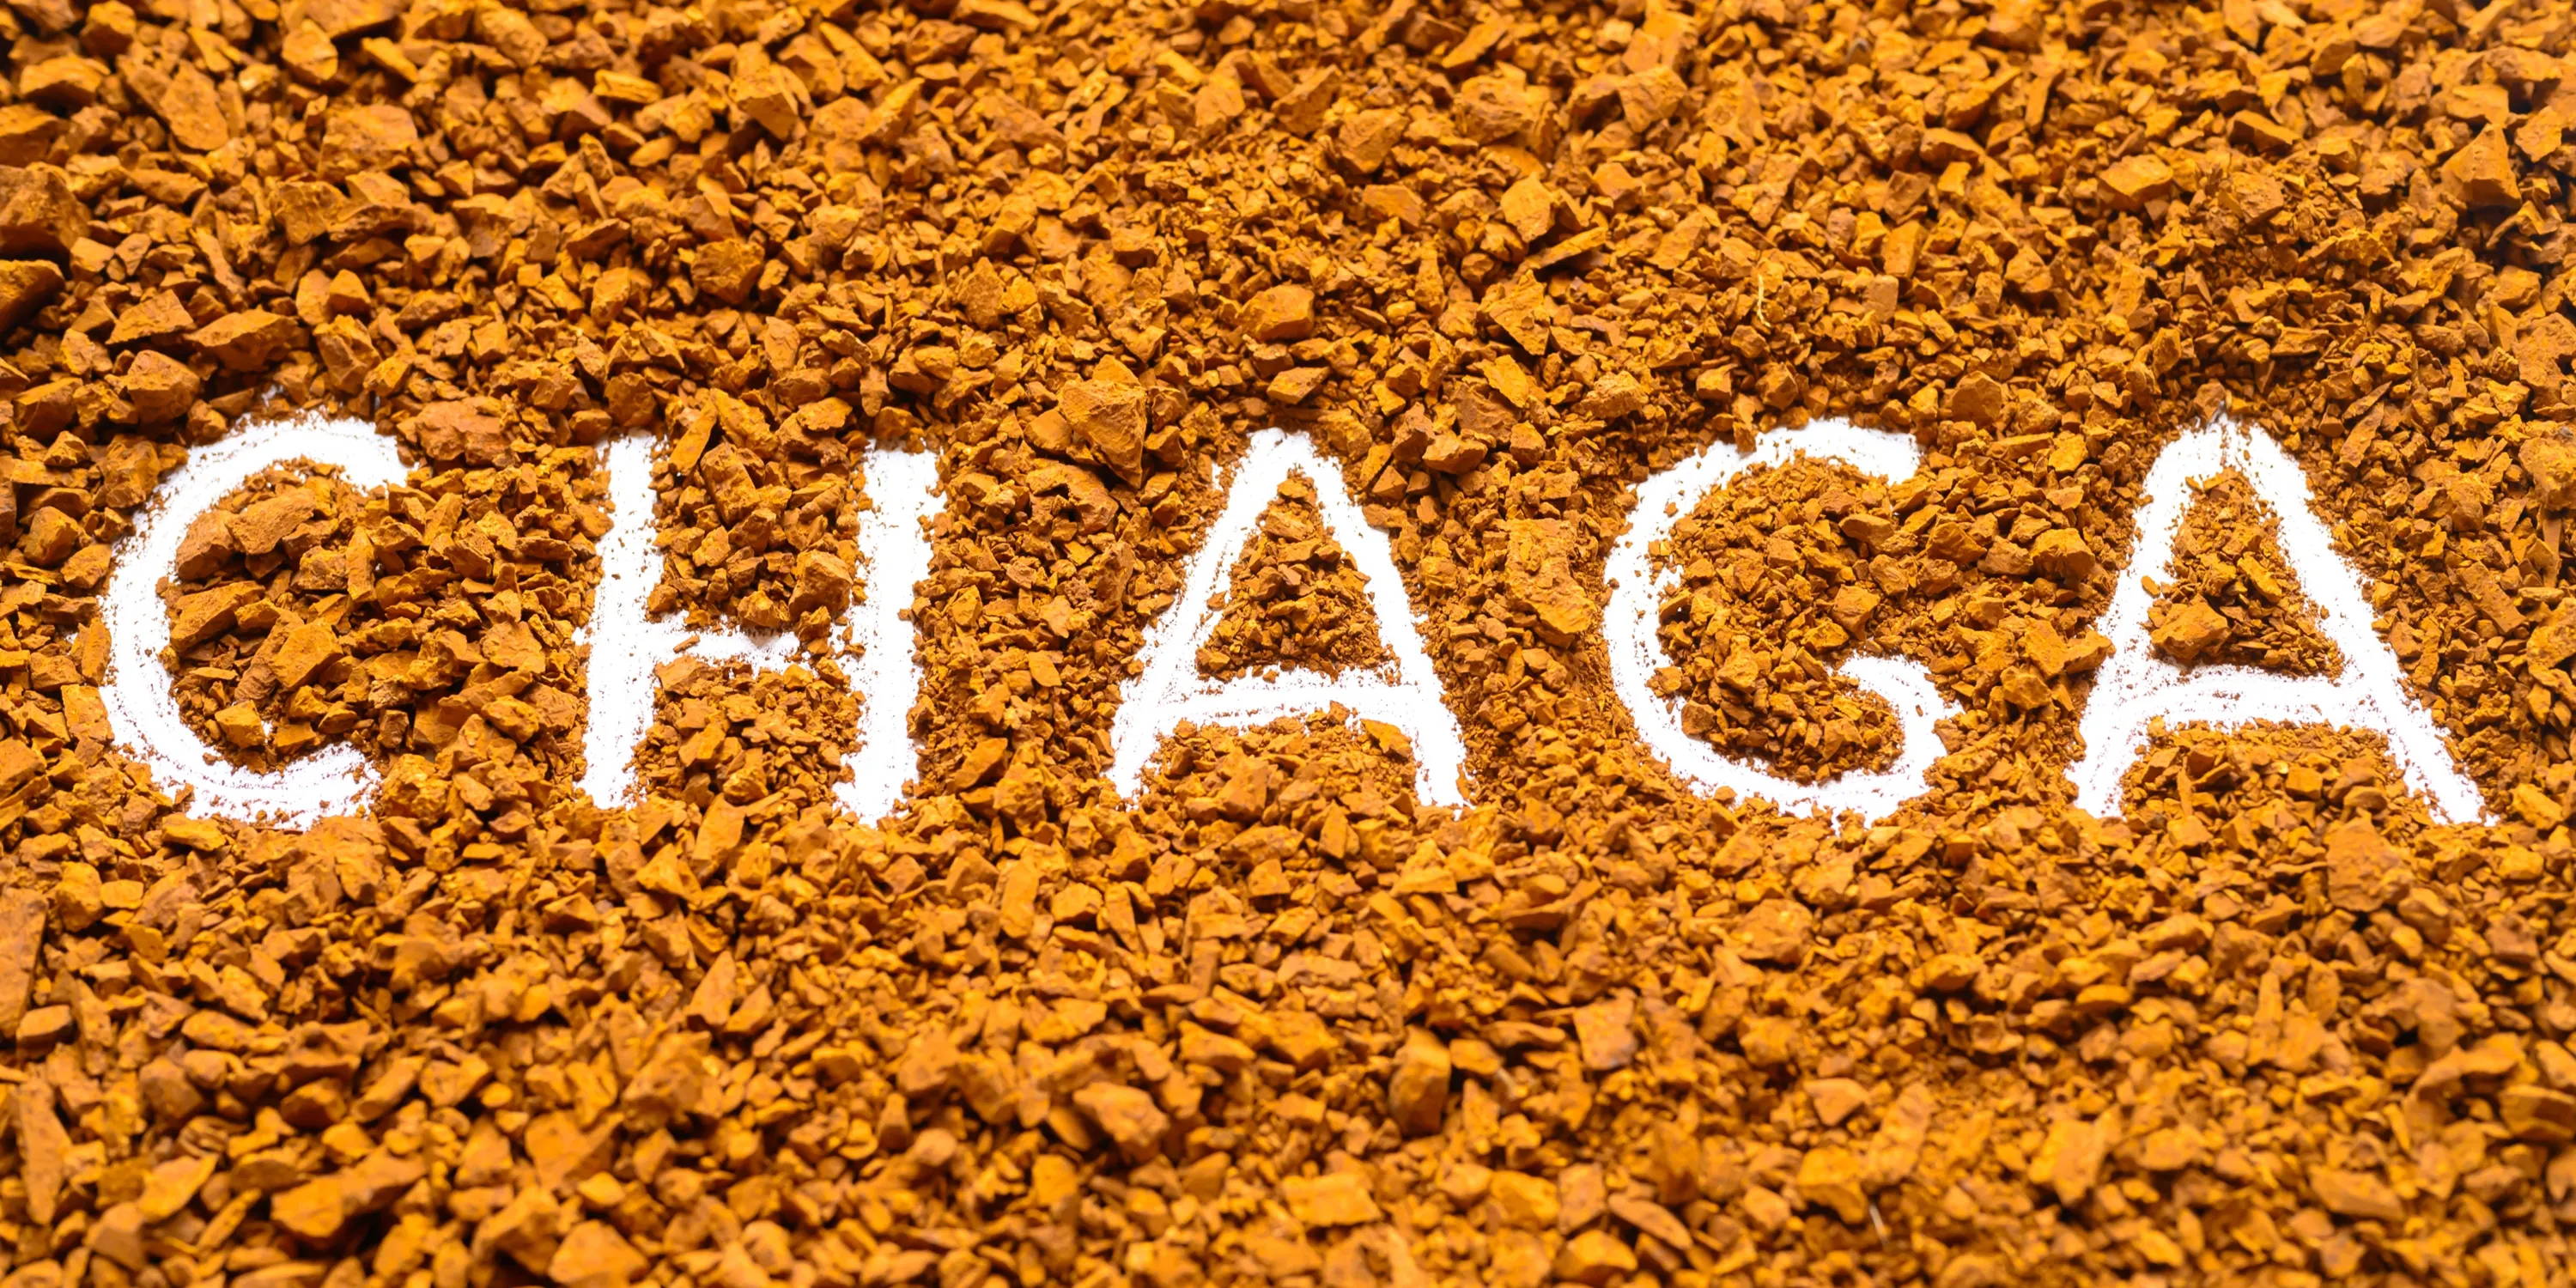 The word chaga drawn into a pile of ground chaga